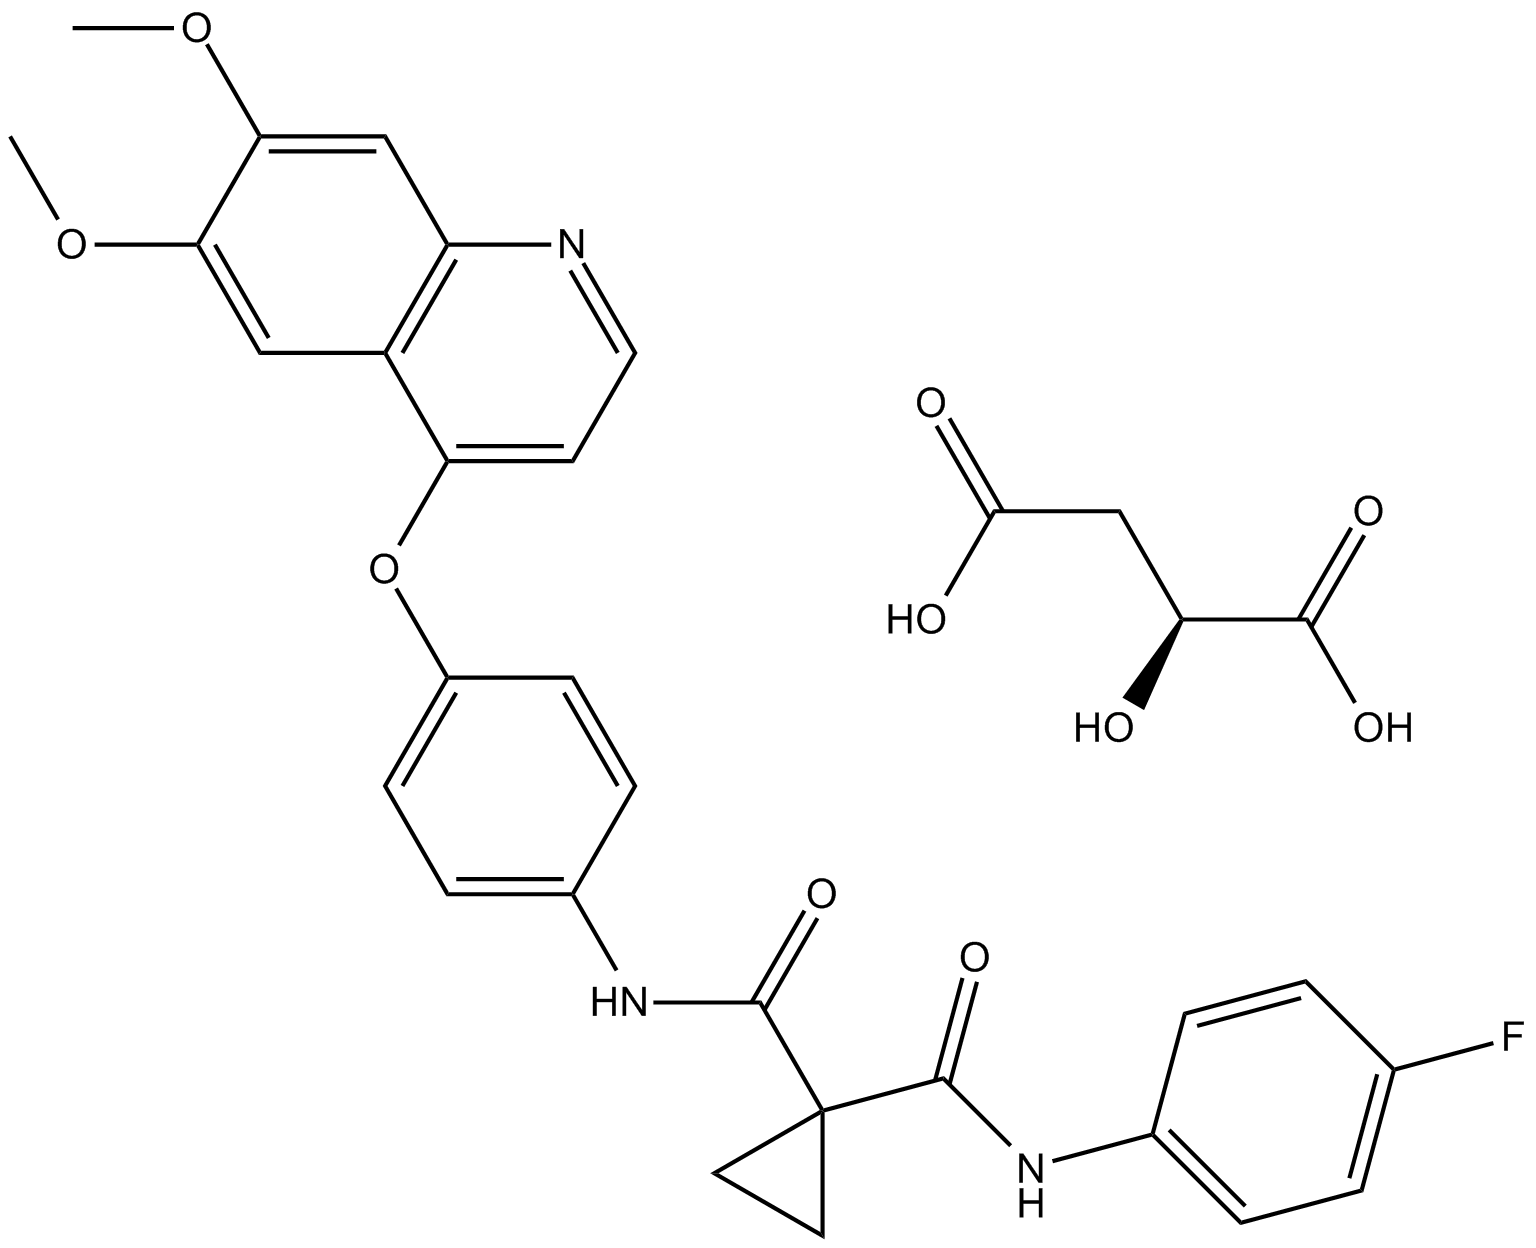 Cabozantinib malate (XL184)